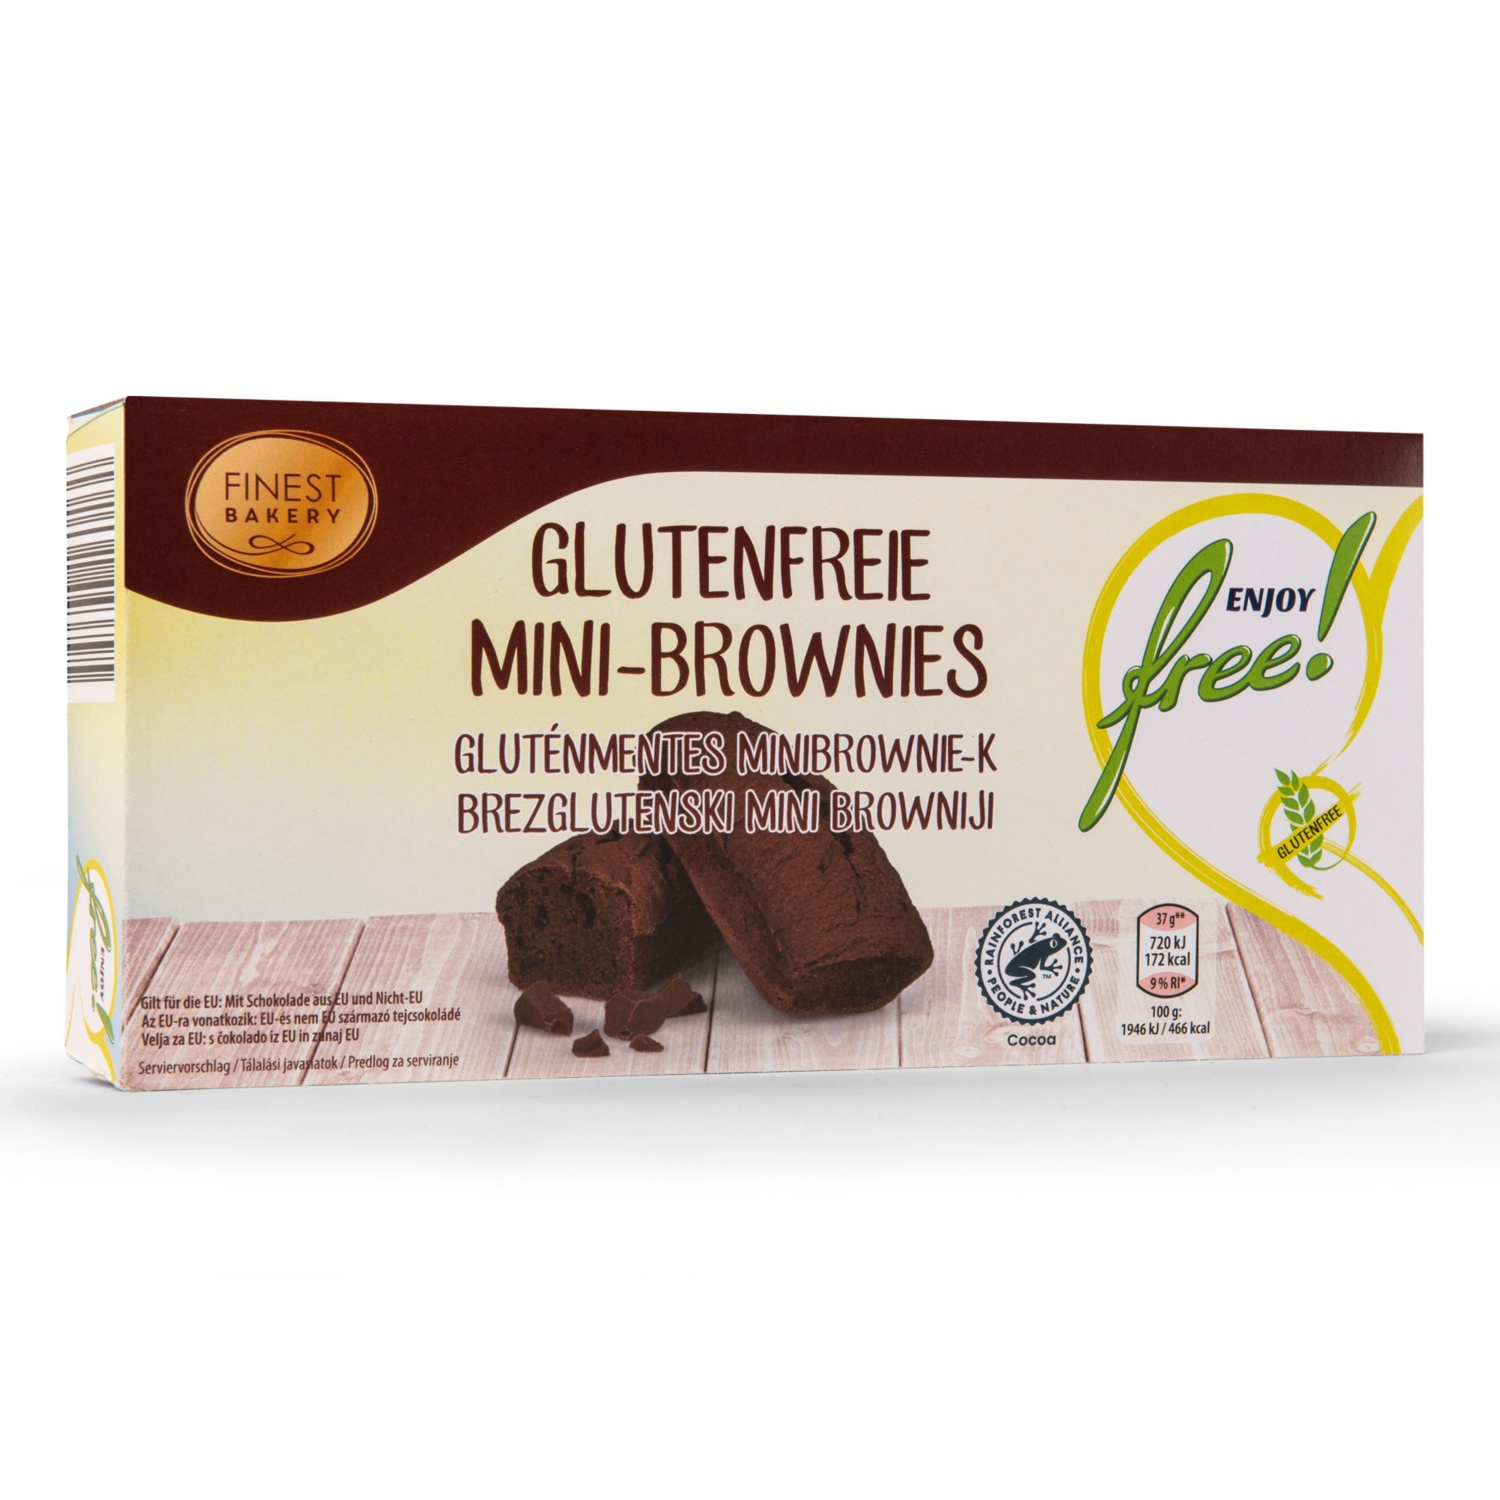 ENJOY FREE! Mini Kuchen glutenfrei, Brownies